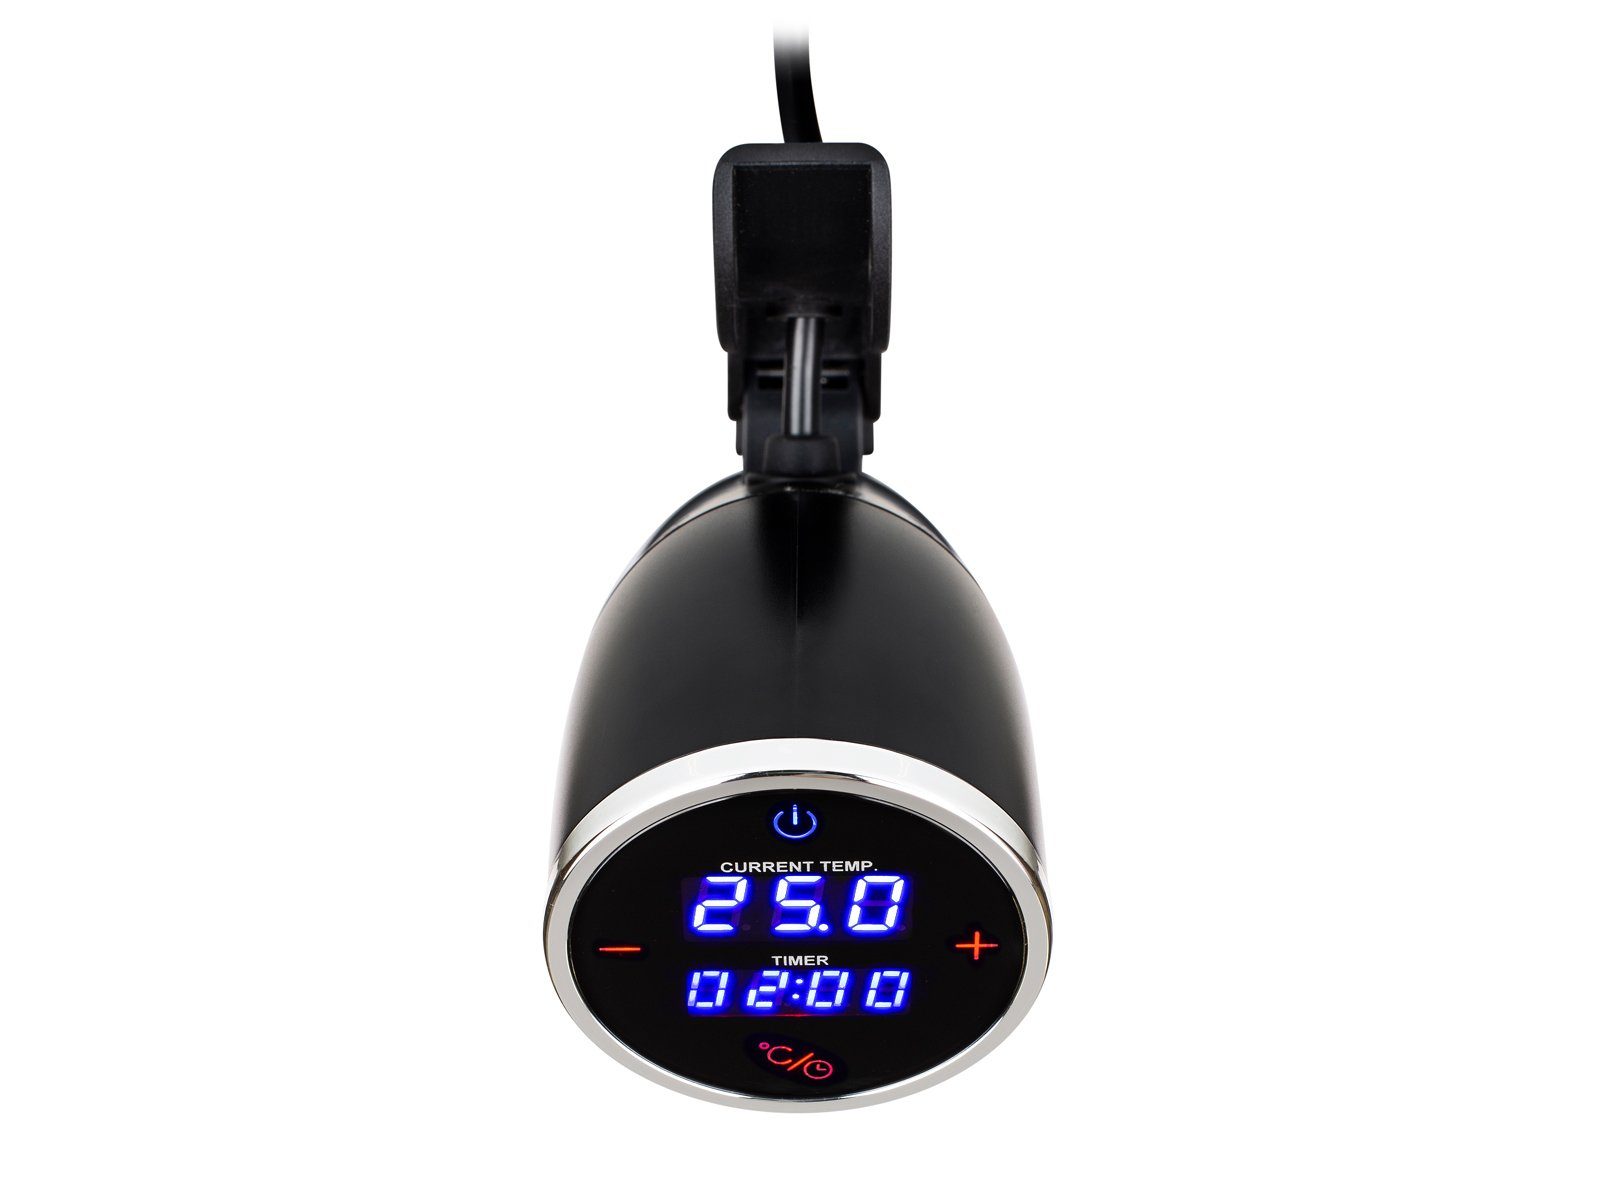 PRINCESS Sous-Vide LED Stick, Souvid Touch Präzisionskocher Stab Schon-Garer Display Thermostat